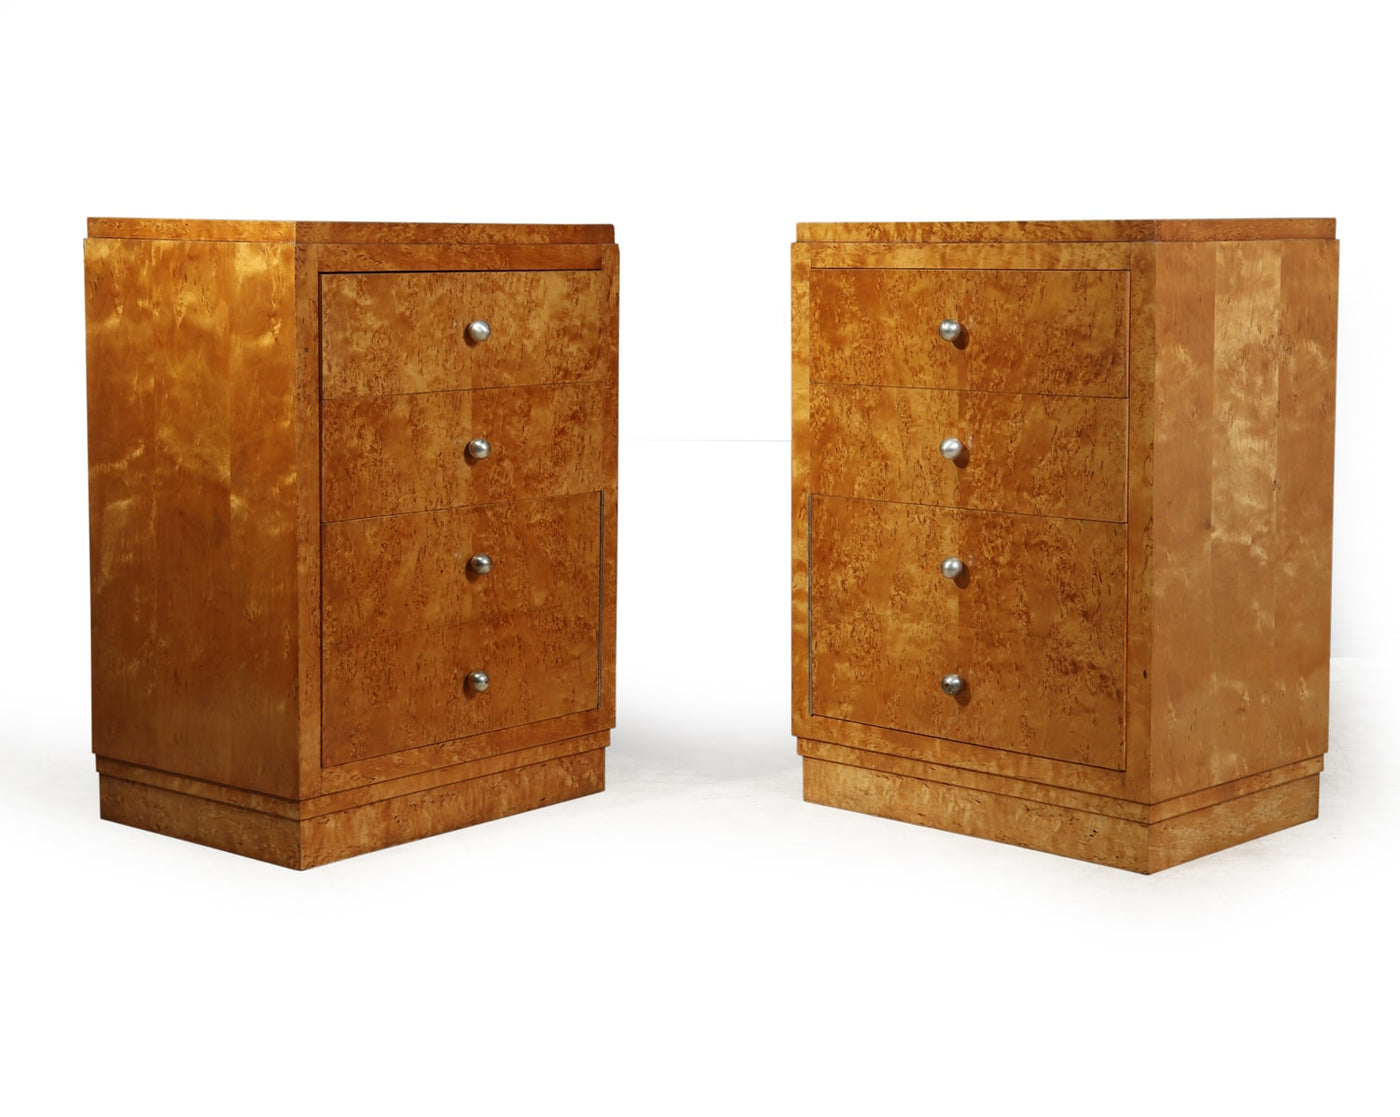 Pair of Art Deco Bedside Cabinets in Karelian Birch